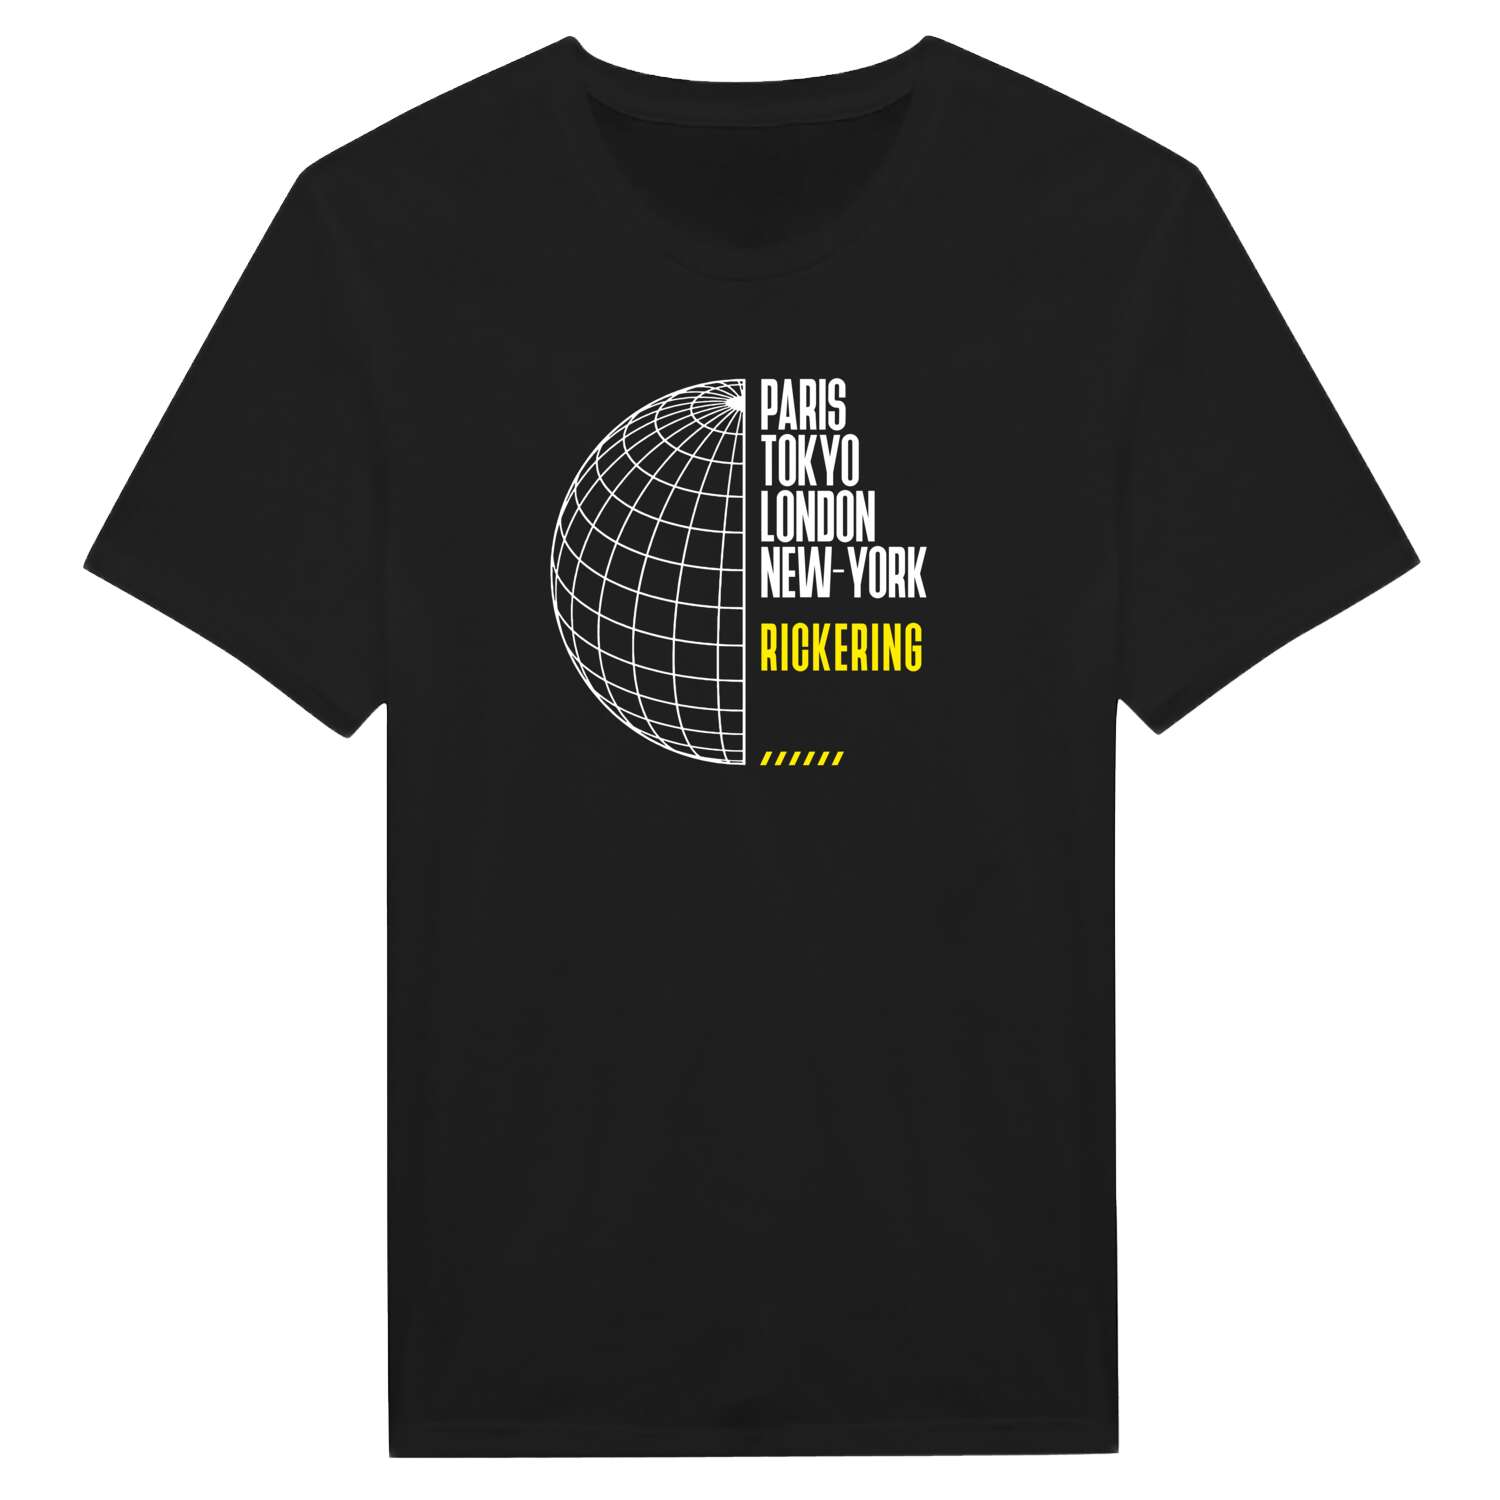 Rickering T-Shirt »Paris Tokyo London«